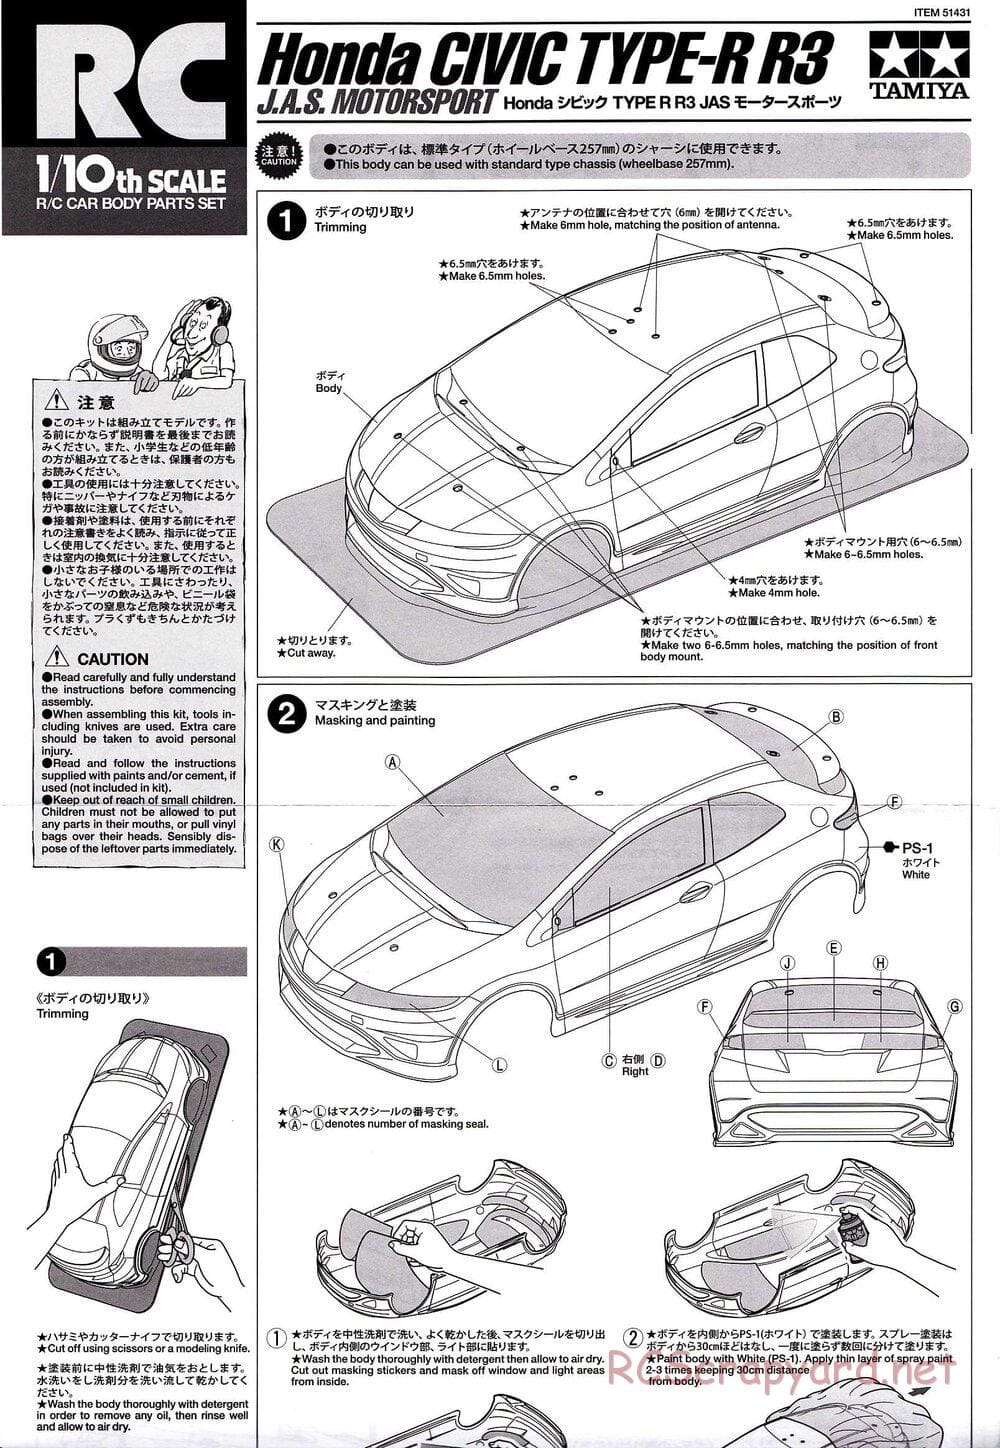 Tamiya - Honda Civic Type-R R3 JAS Motorsport - FF-03 Chassis - Body Manual - Page 1